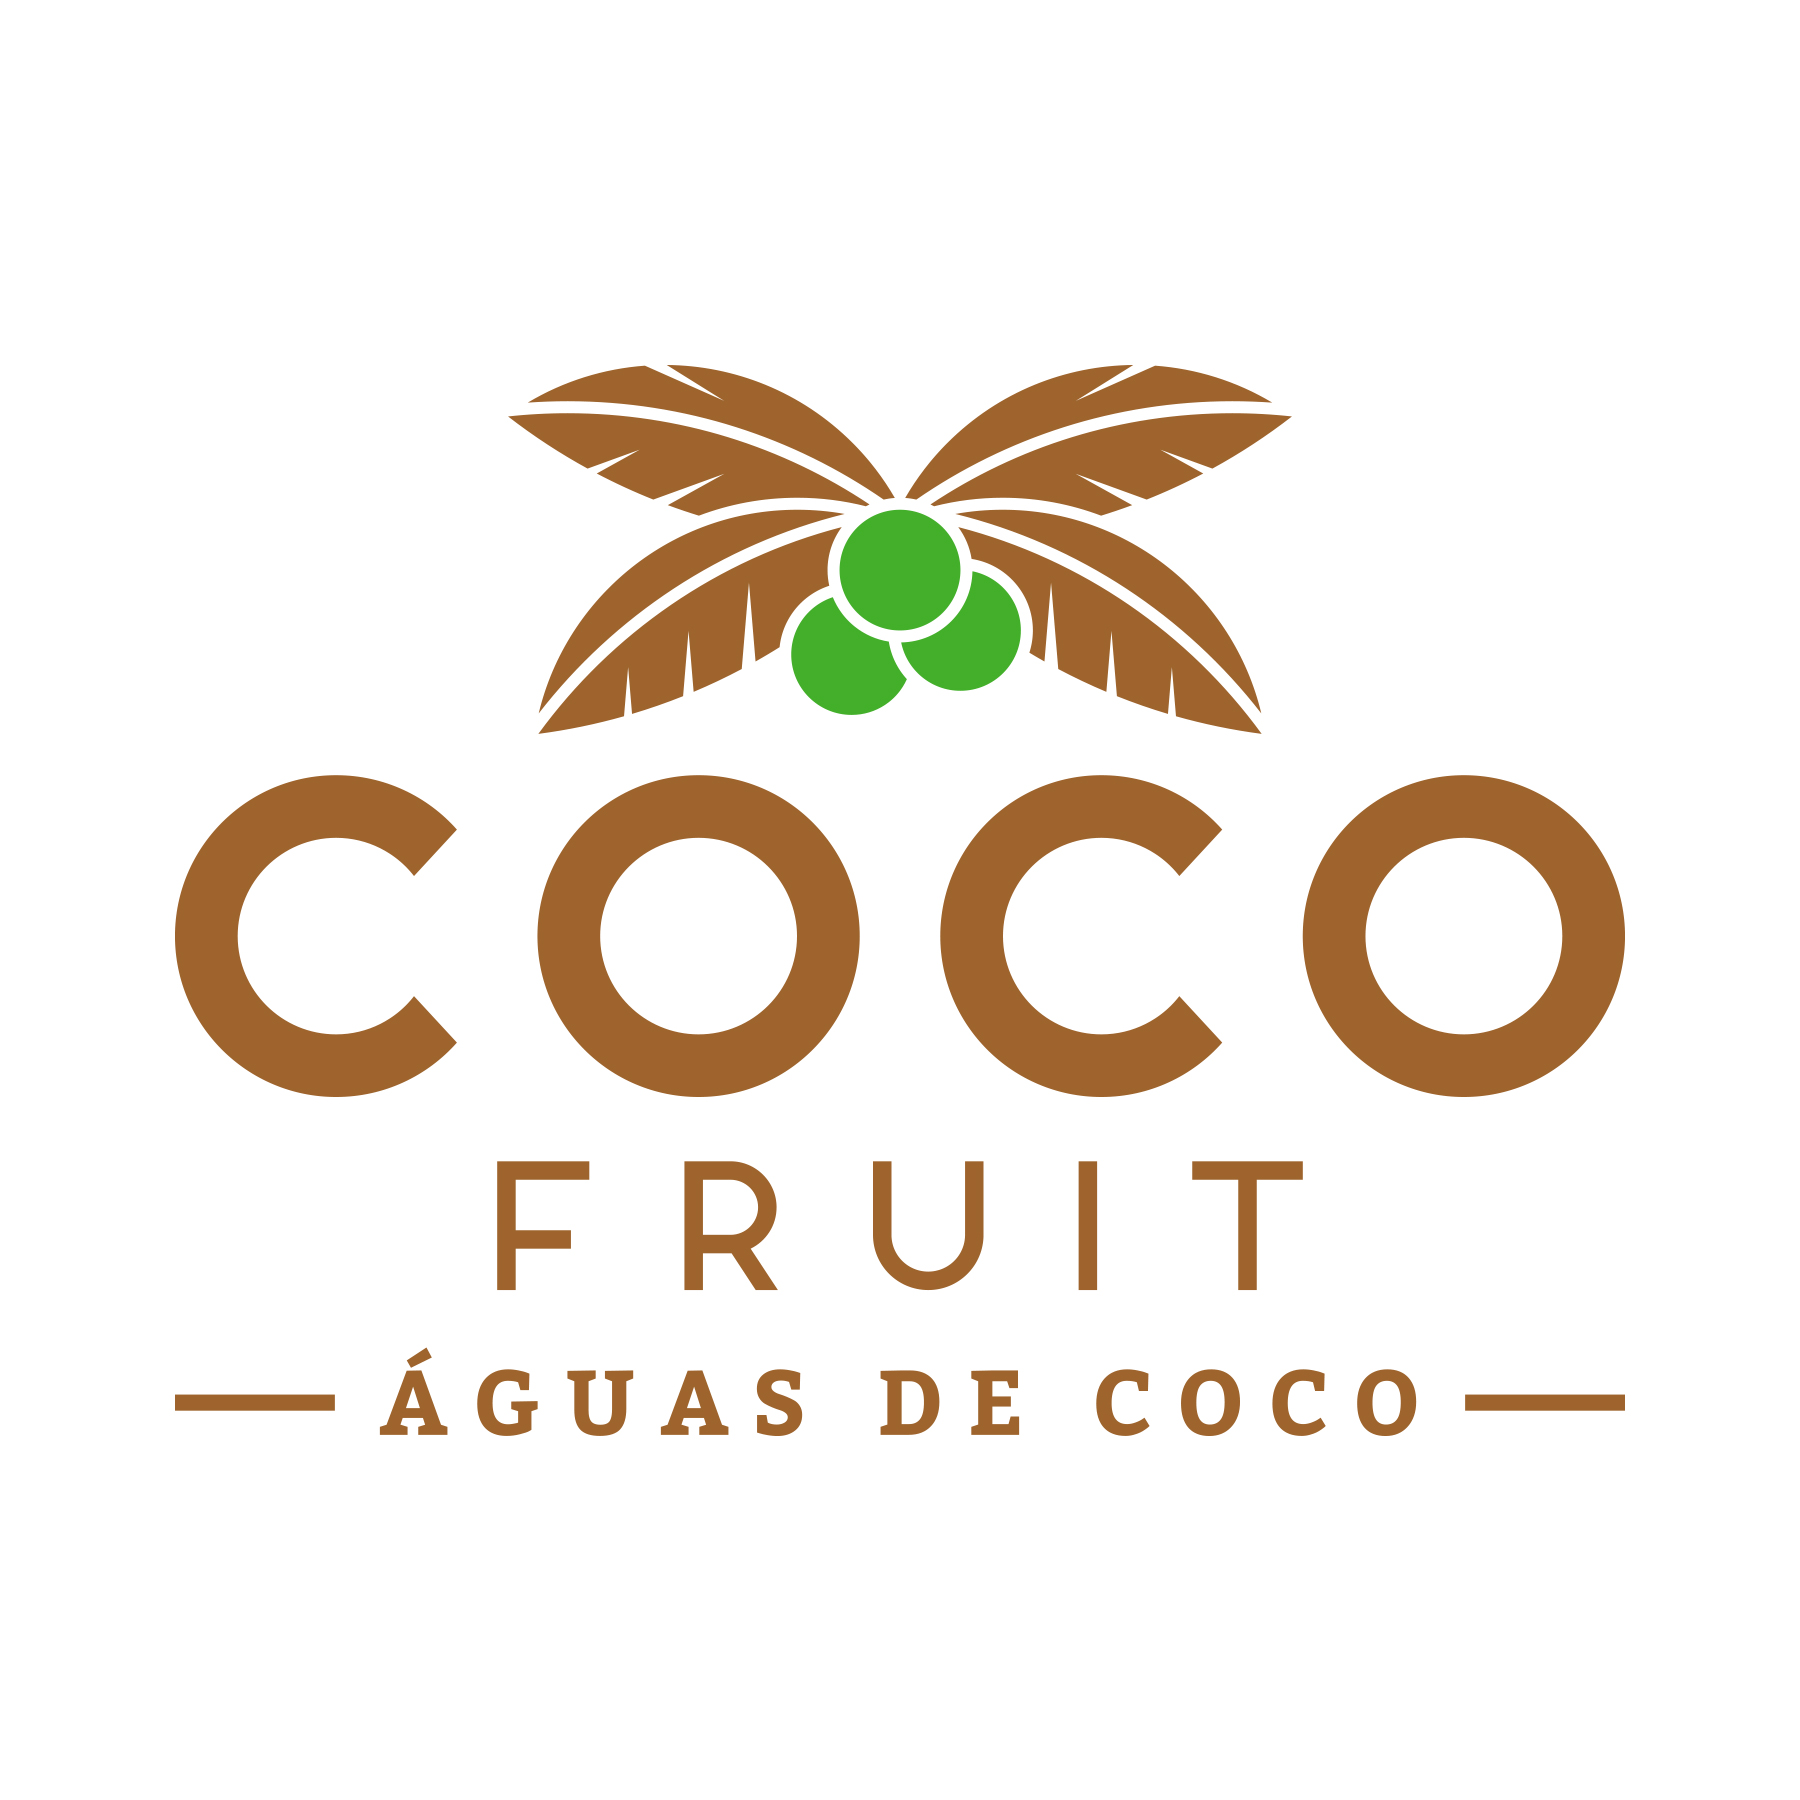 COCO Logo photo - 1